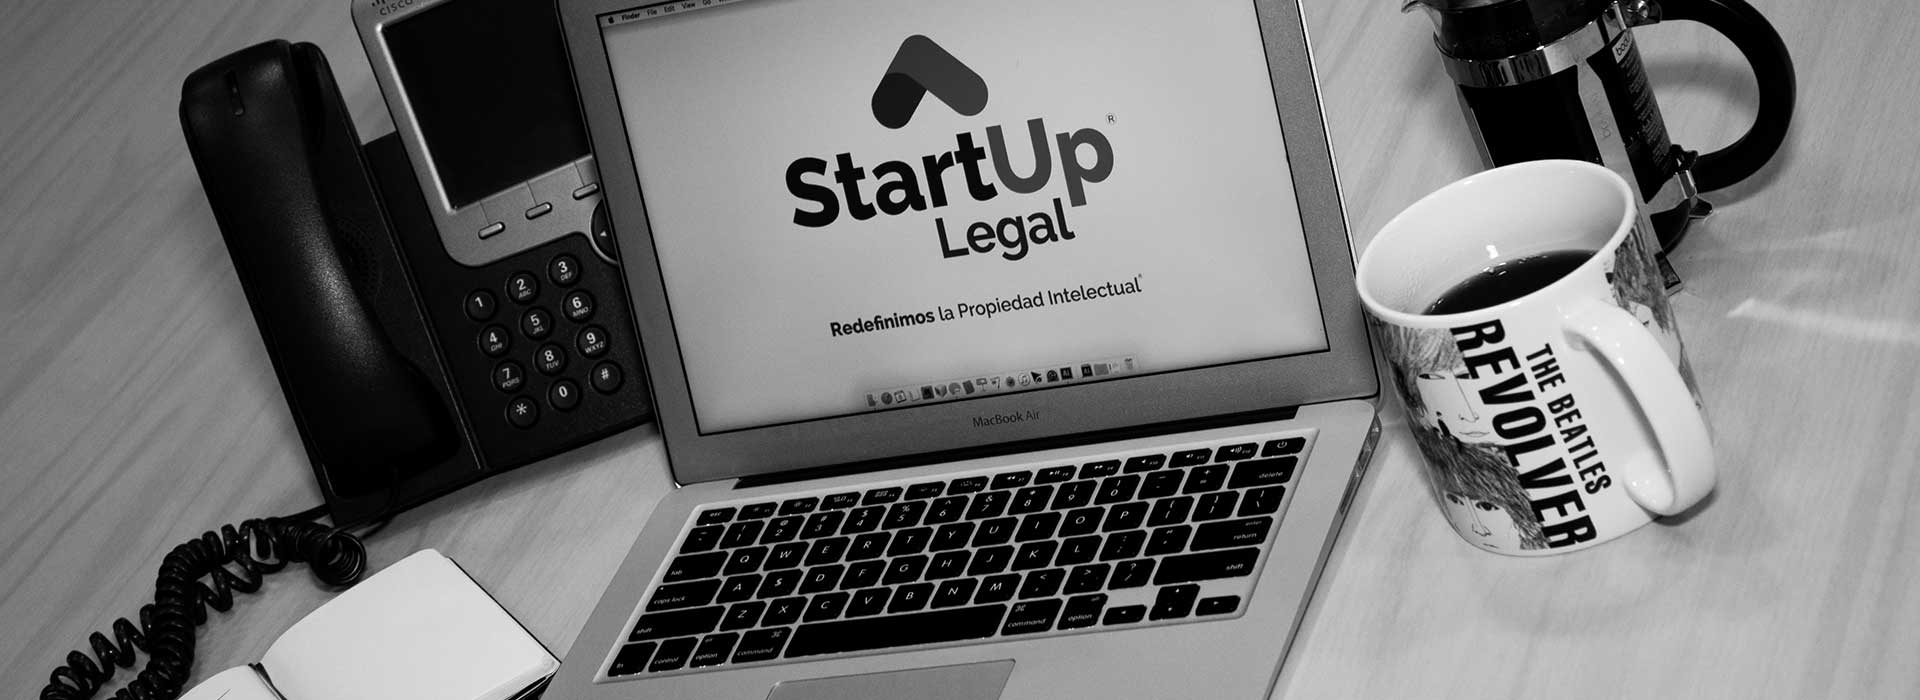 Bienvenido a Startup Legal®